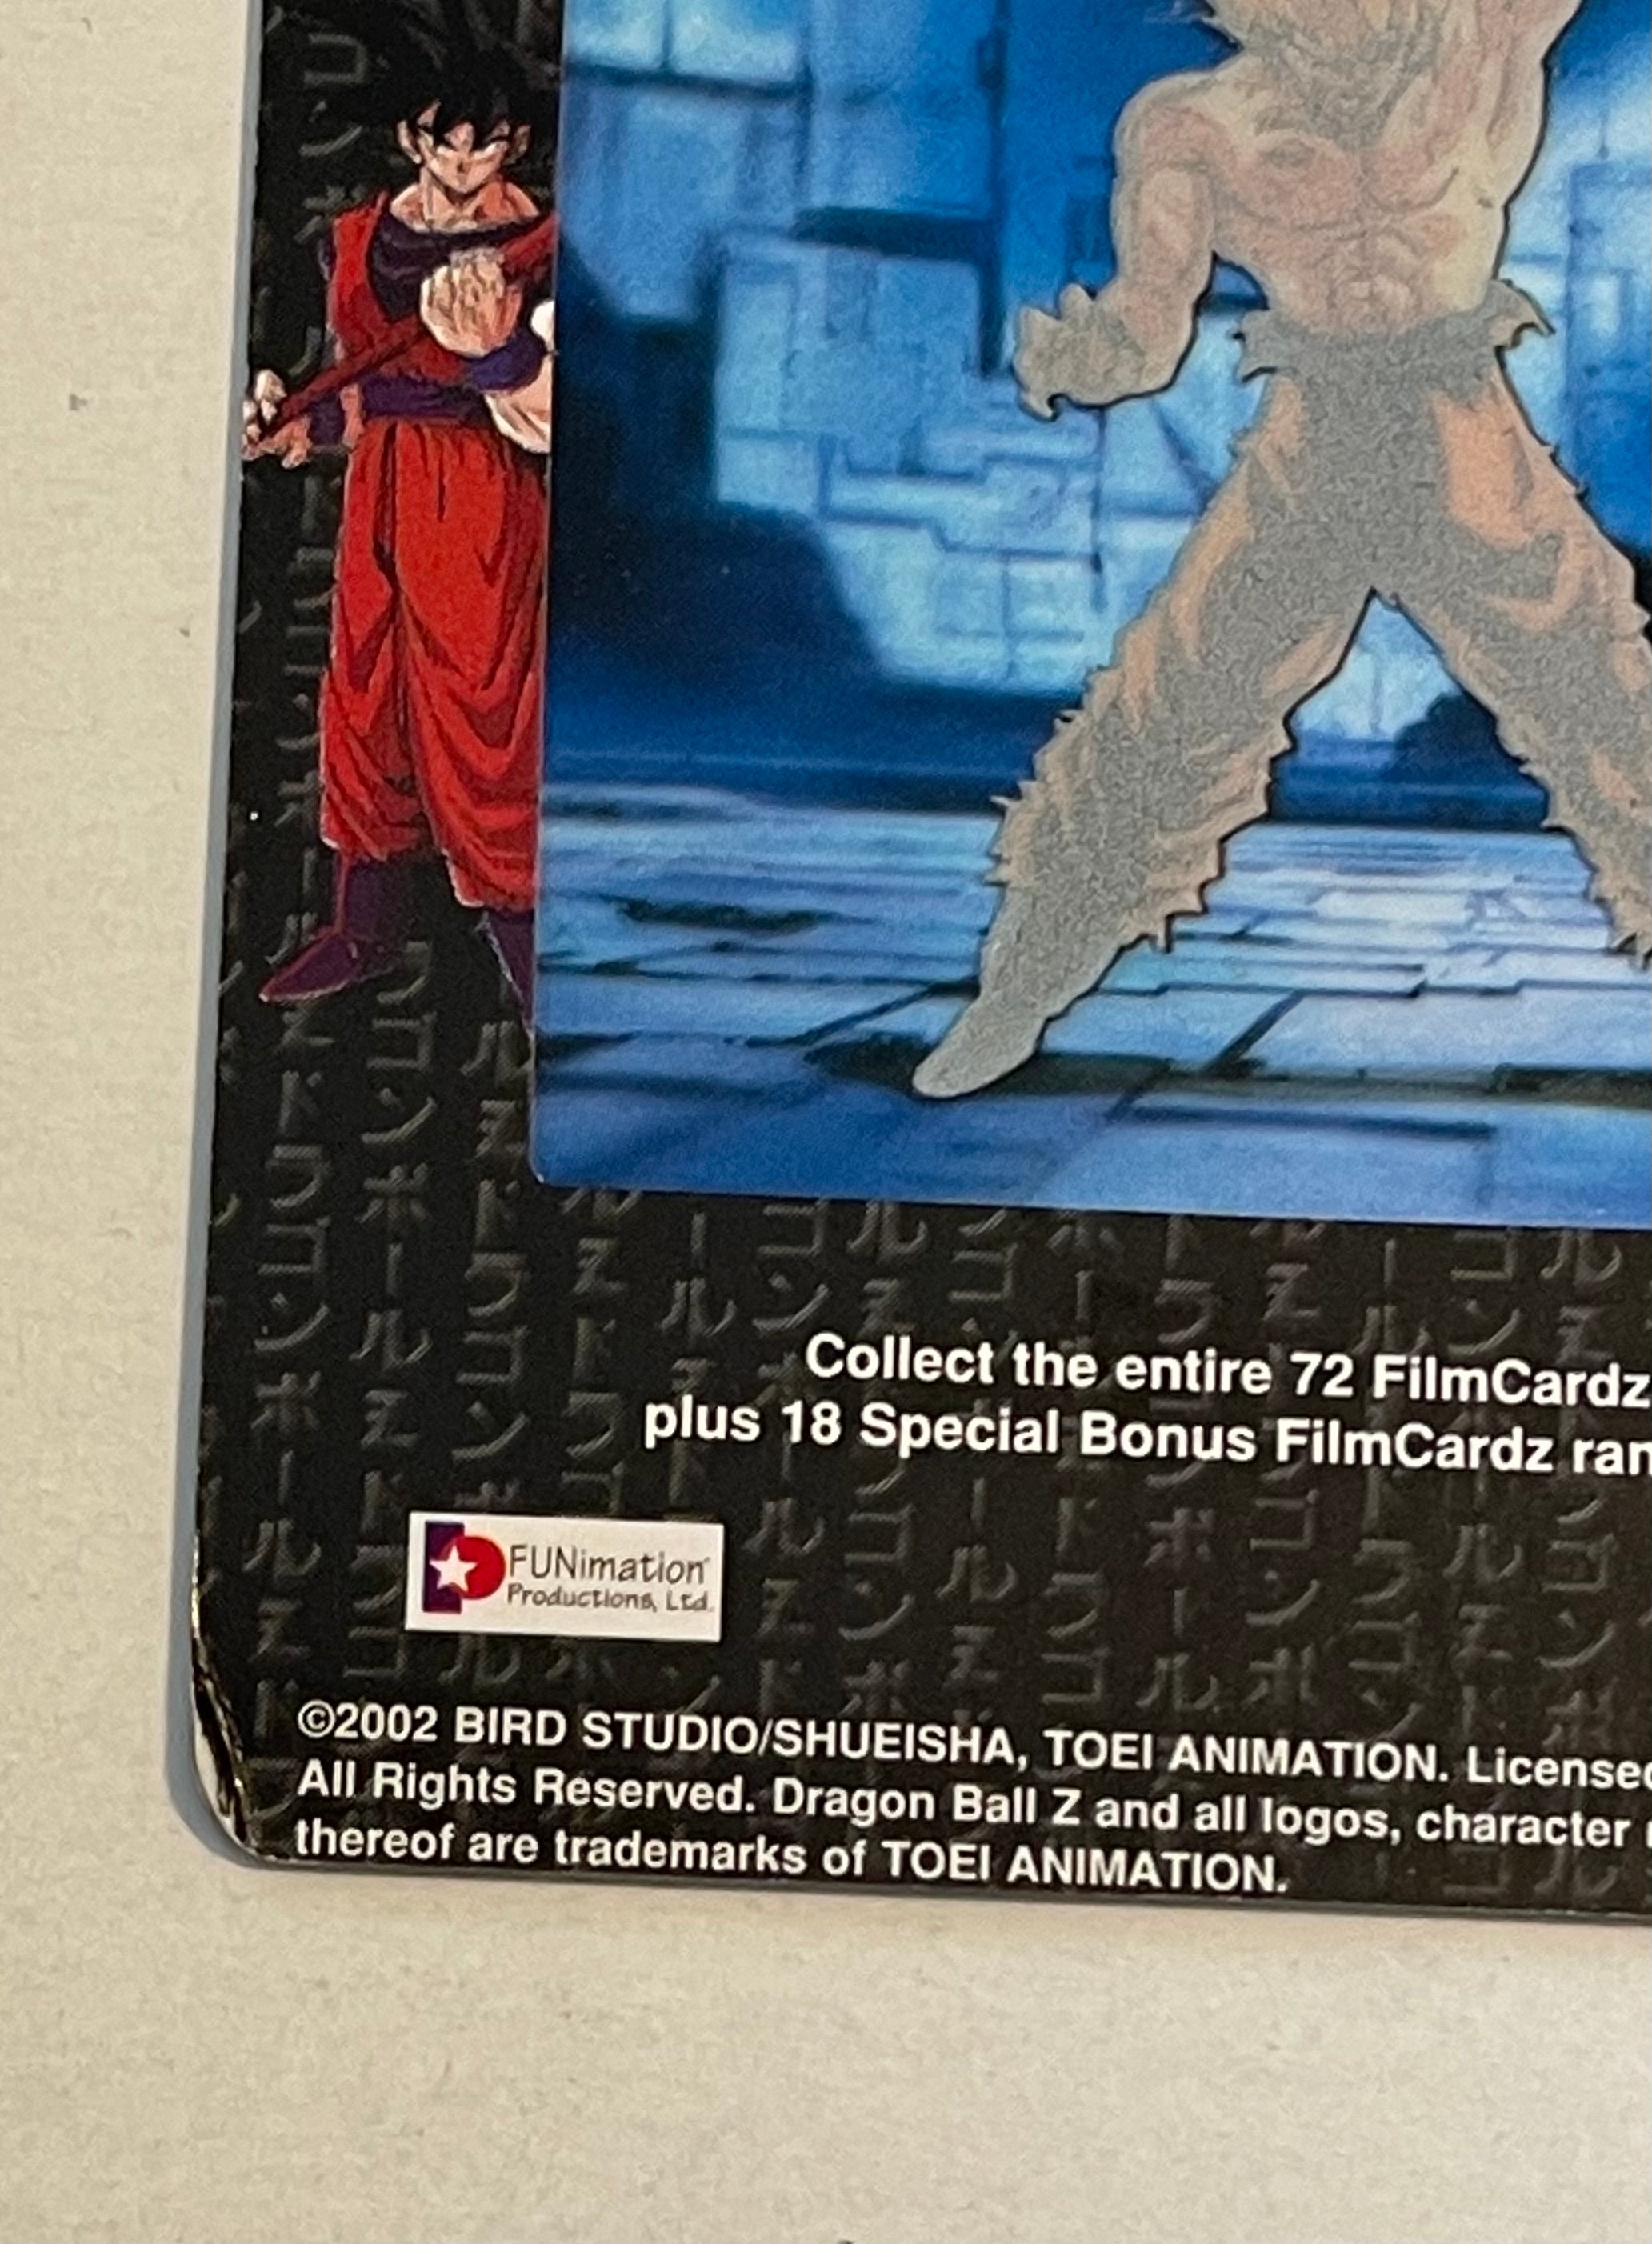 Dragonball Z translucent clear P3 rare promo card 2002